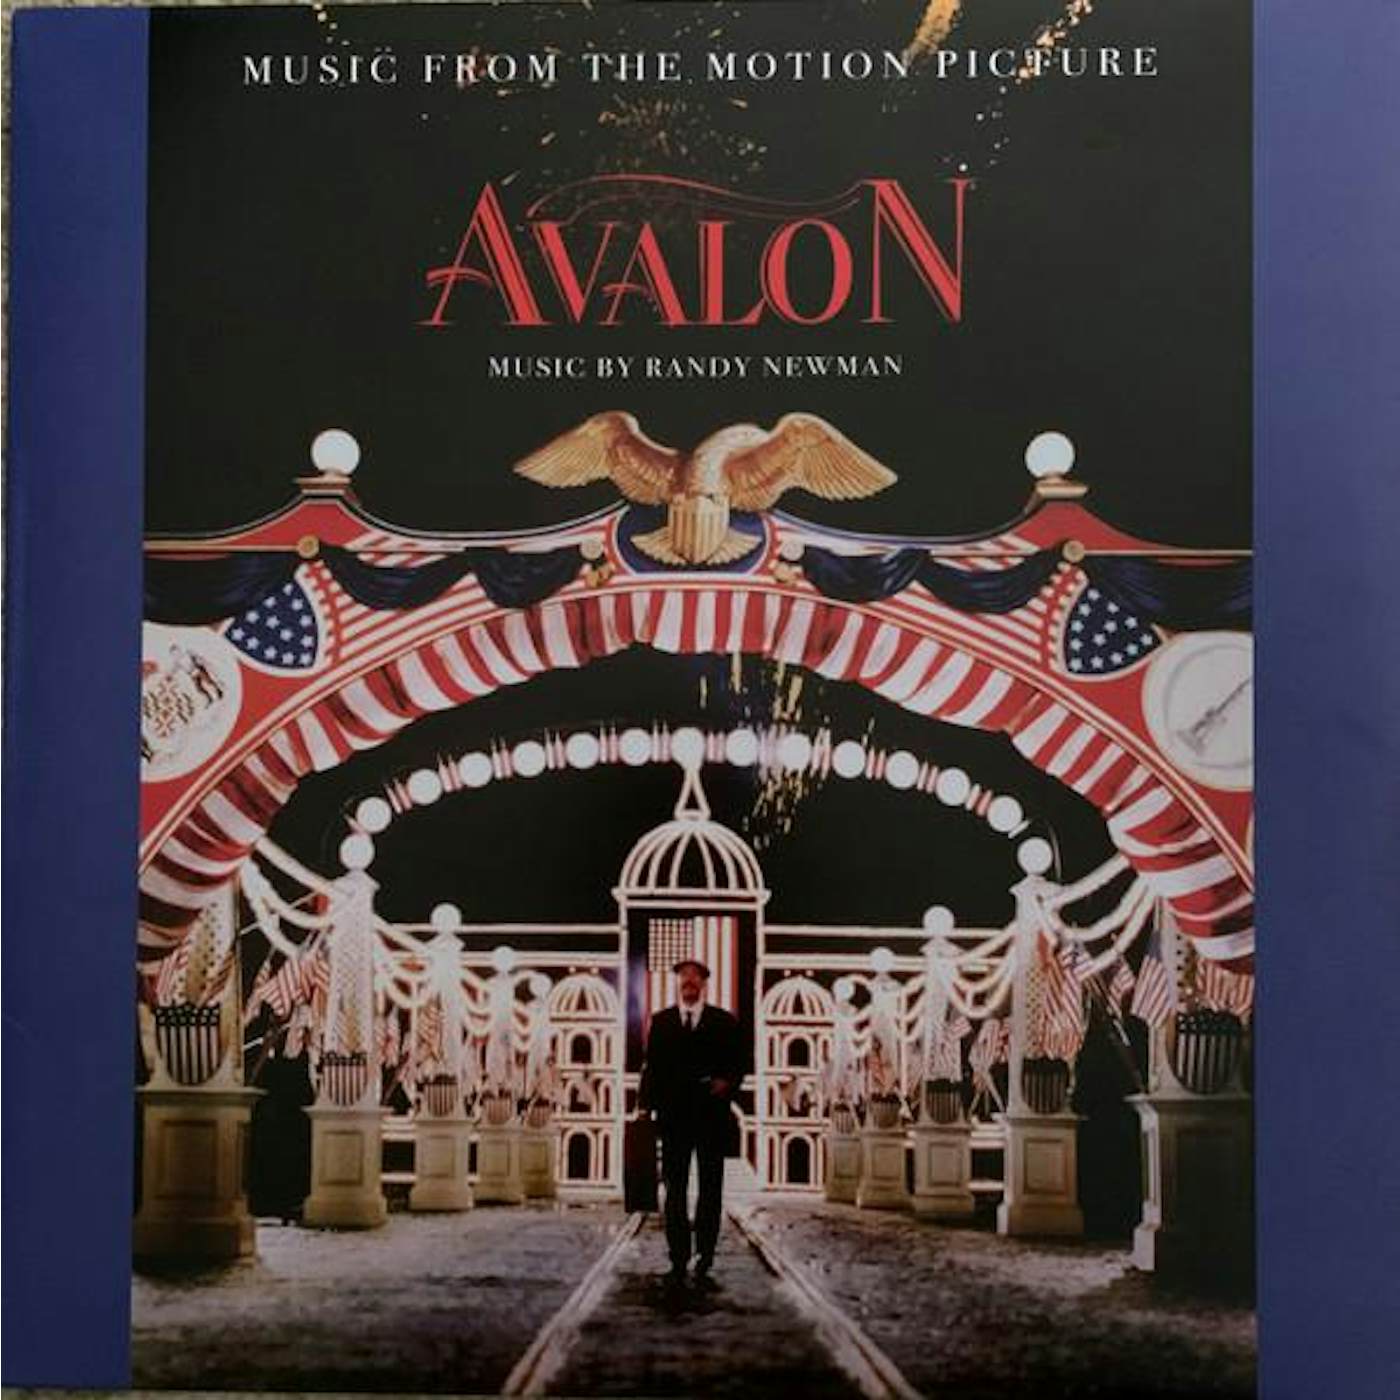 Randy Newman AVALON (SOLID BLUE & SOLID SILVER VINYL) (RSD) Vinyl Record